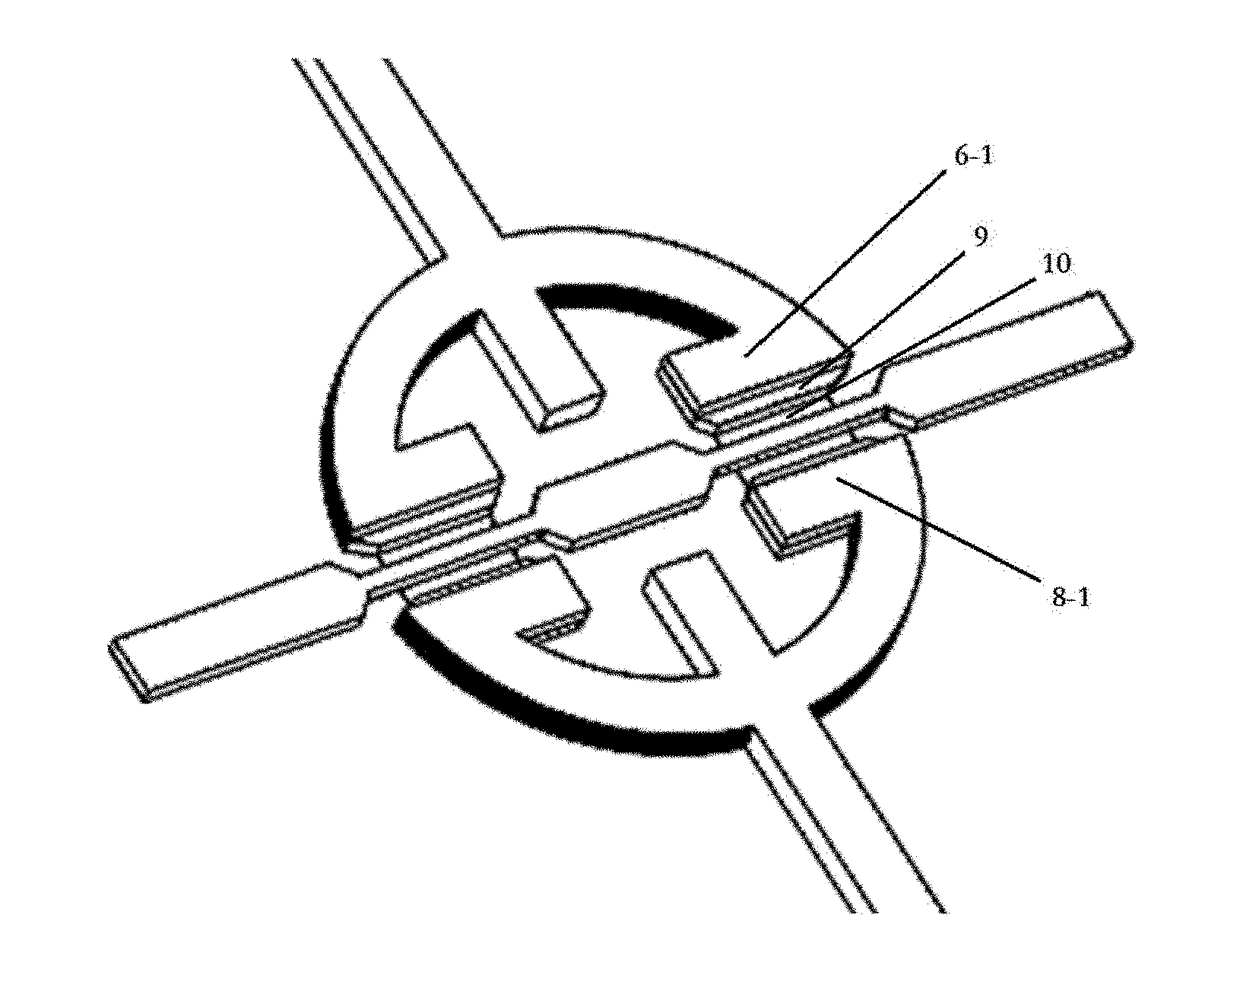 Spatial terahertz wave phase modulator based on high electron mobility transistor